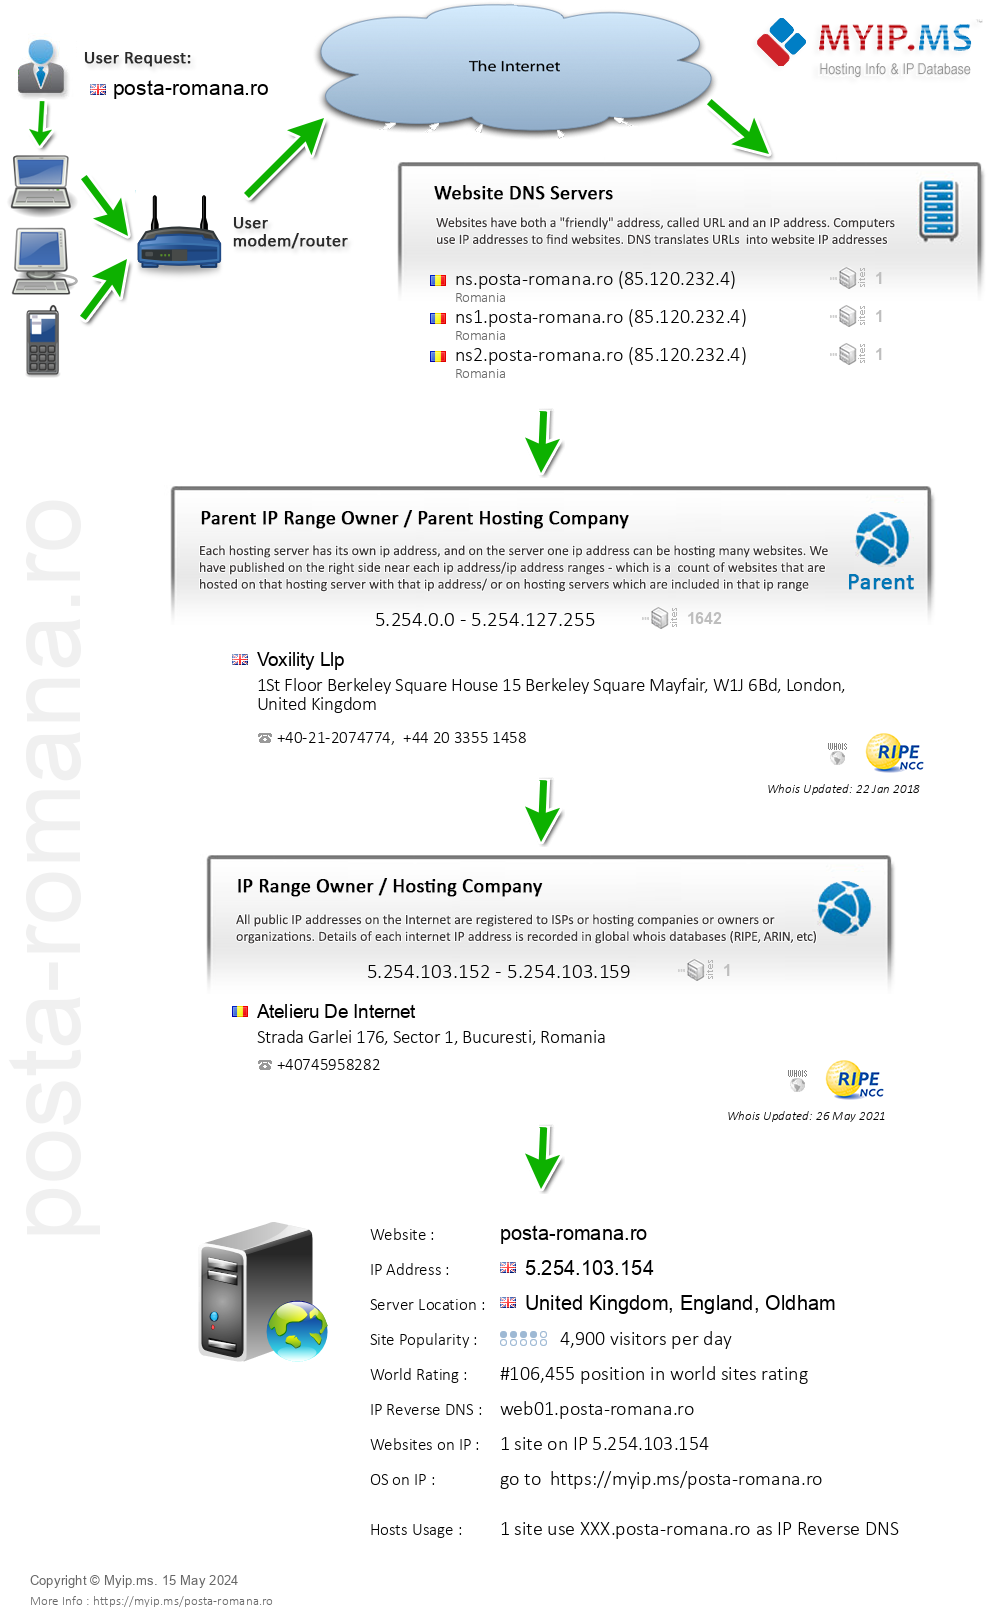 Posta-romana.ro - Website Hosting Visual IP Diagram